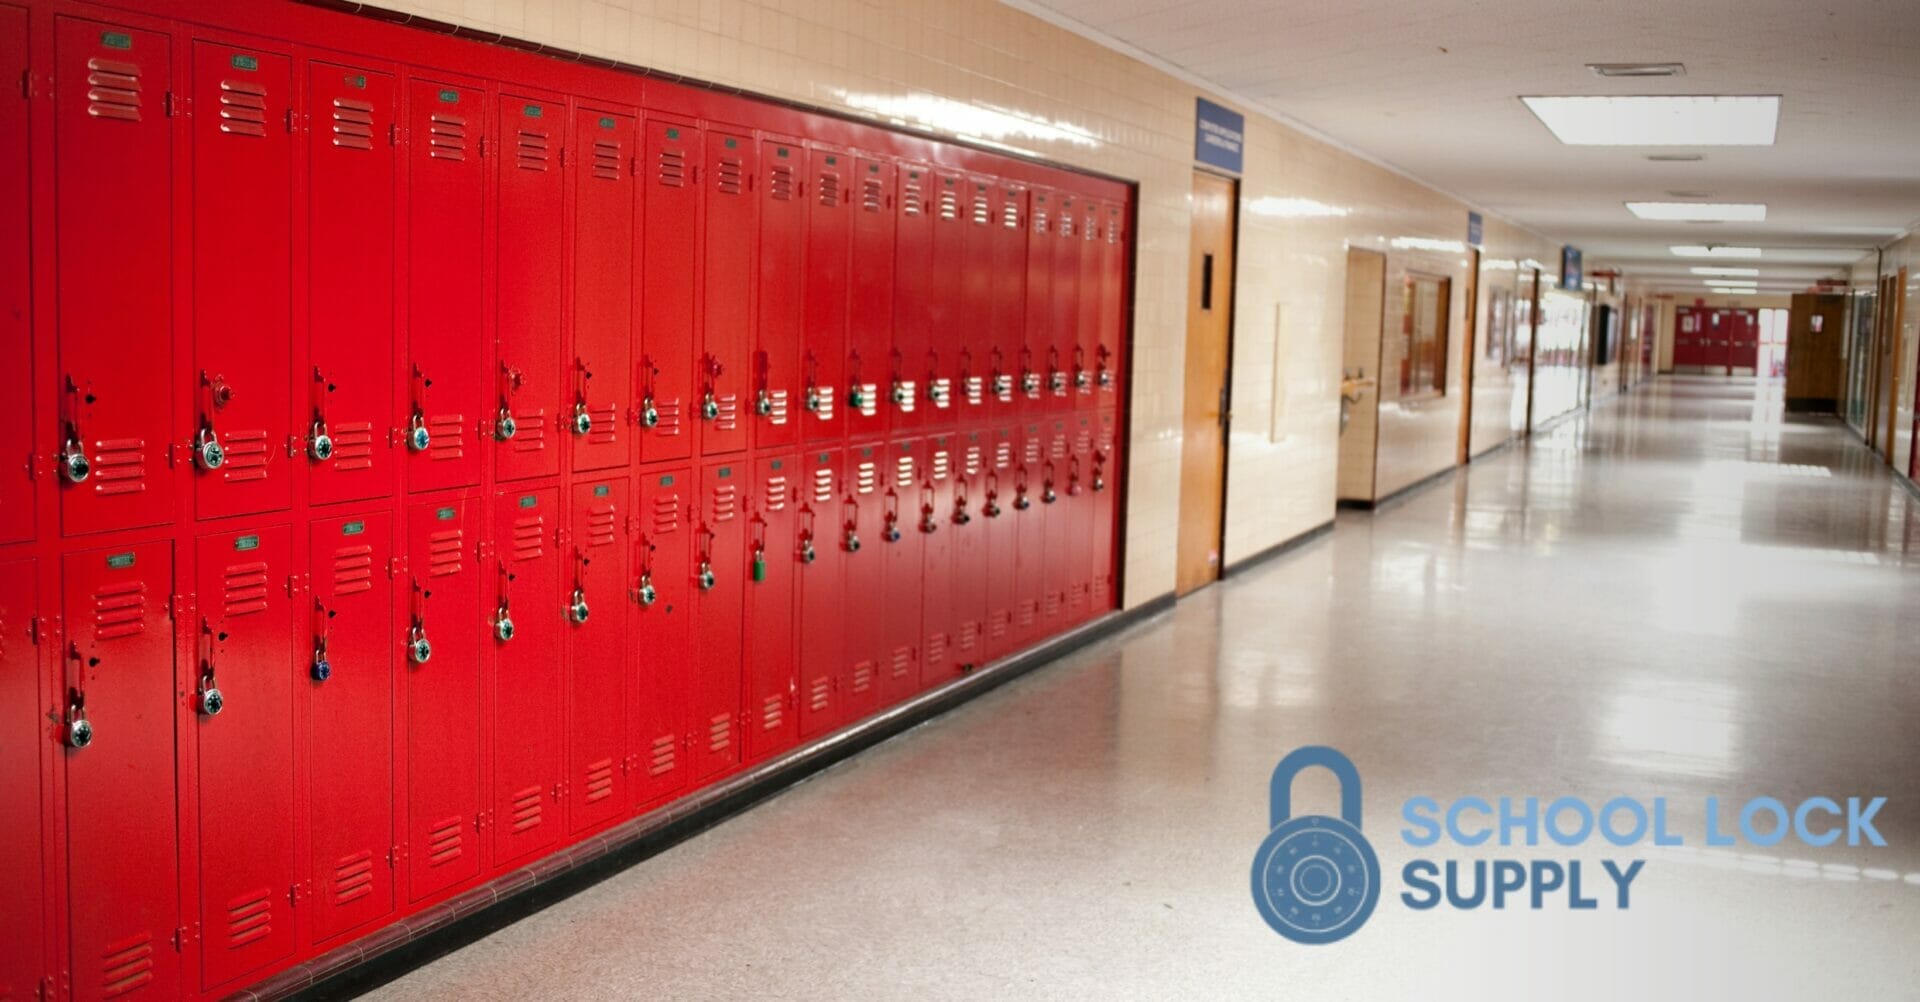 Why Choose School Lock Supply for Your School Locker Locks?